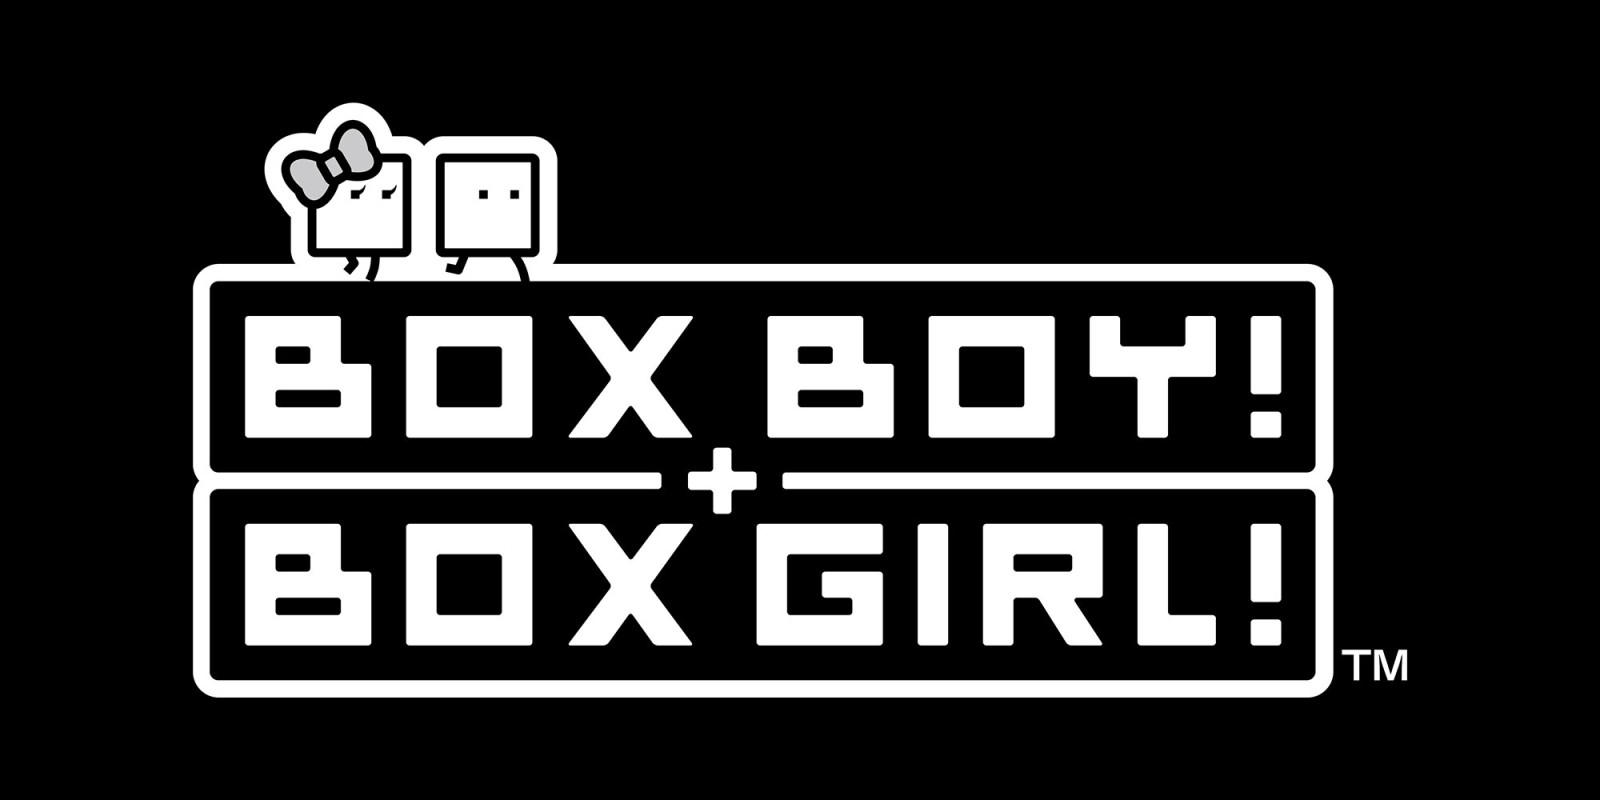 box boy box girl switch